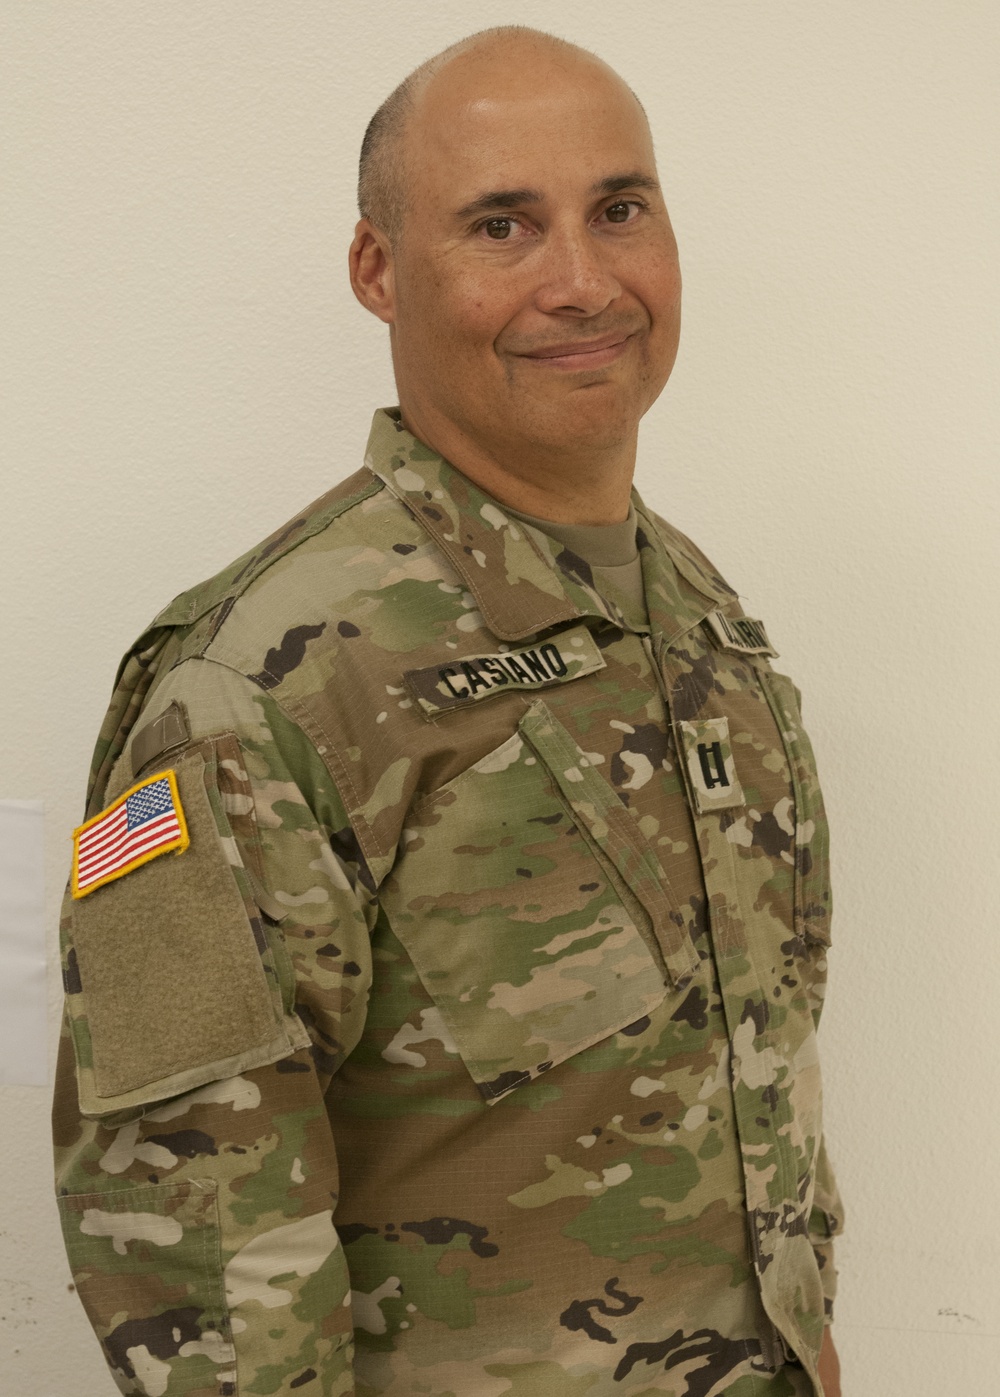 Army Capt. celebrates Hispanic Heritage Month